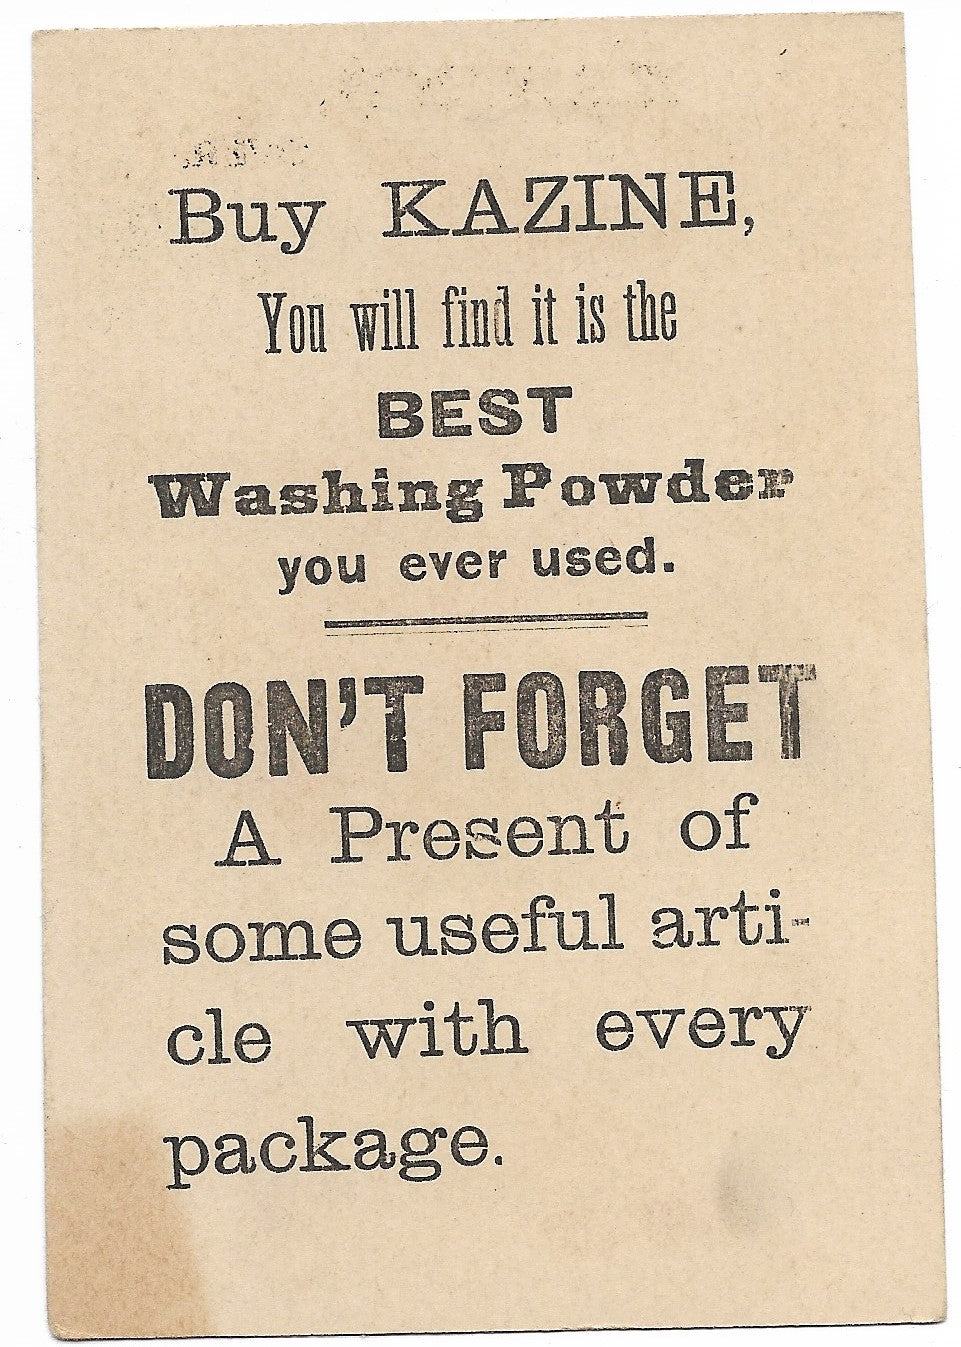 Kazine Washing Powder (Baby Doorman) Antique Trade Card - 3" x 4.5"